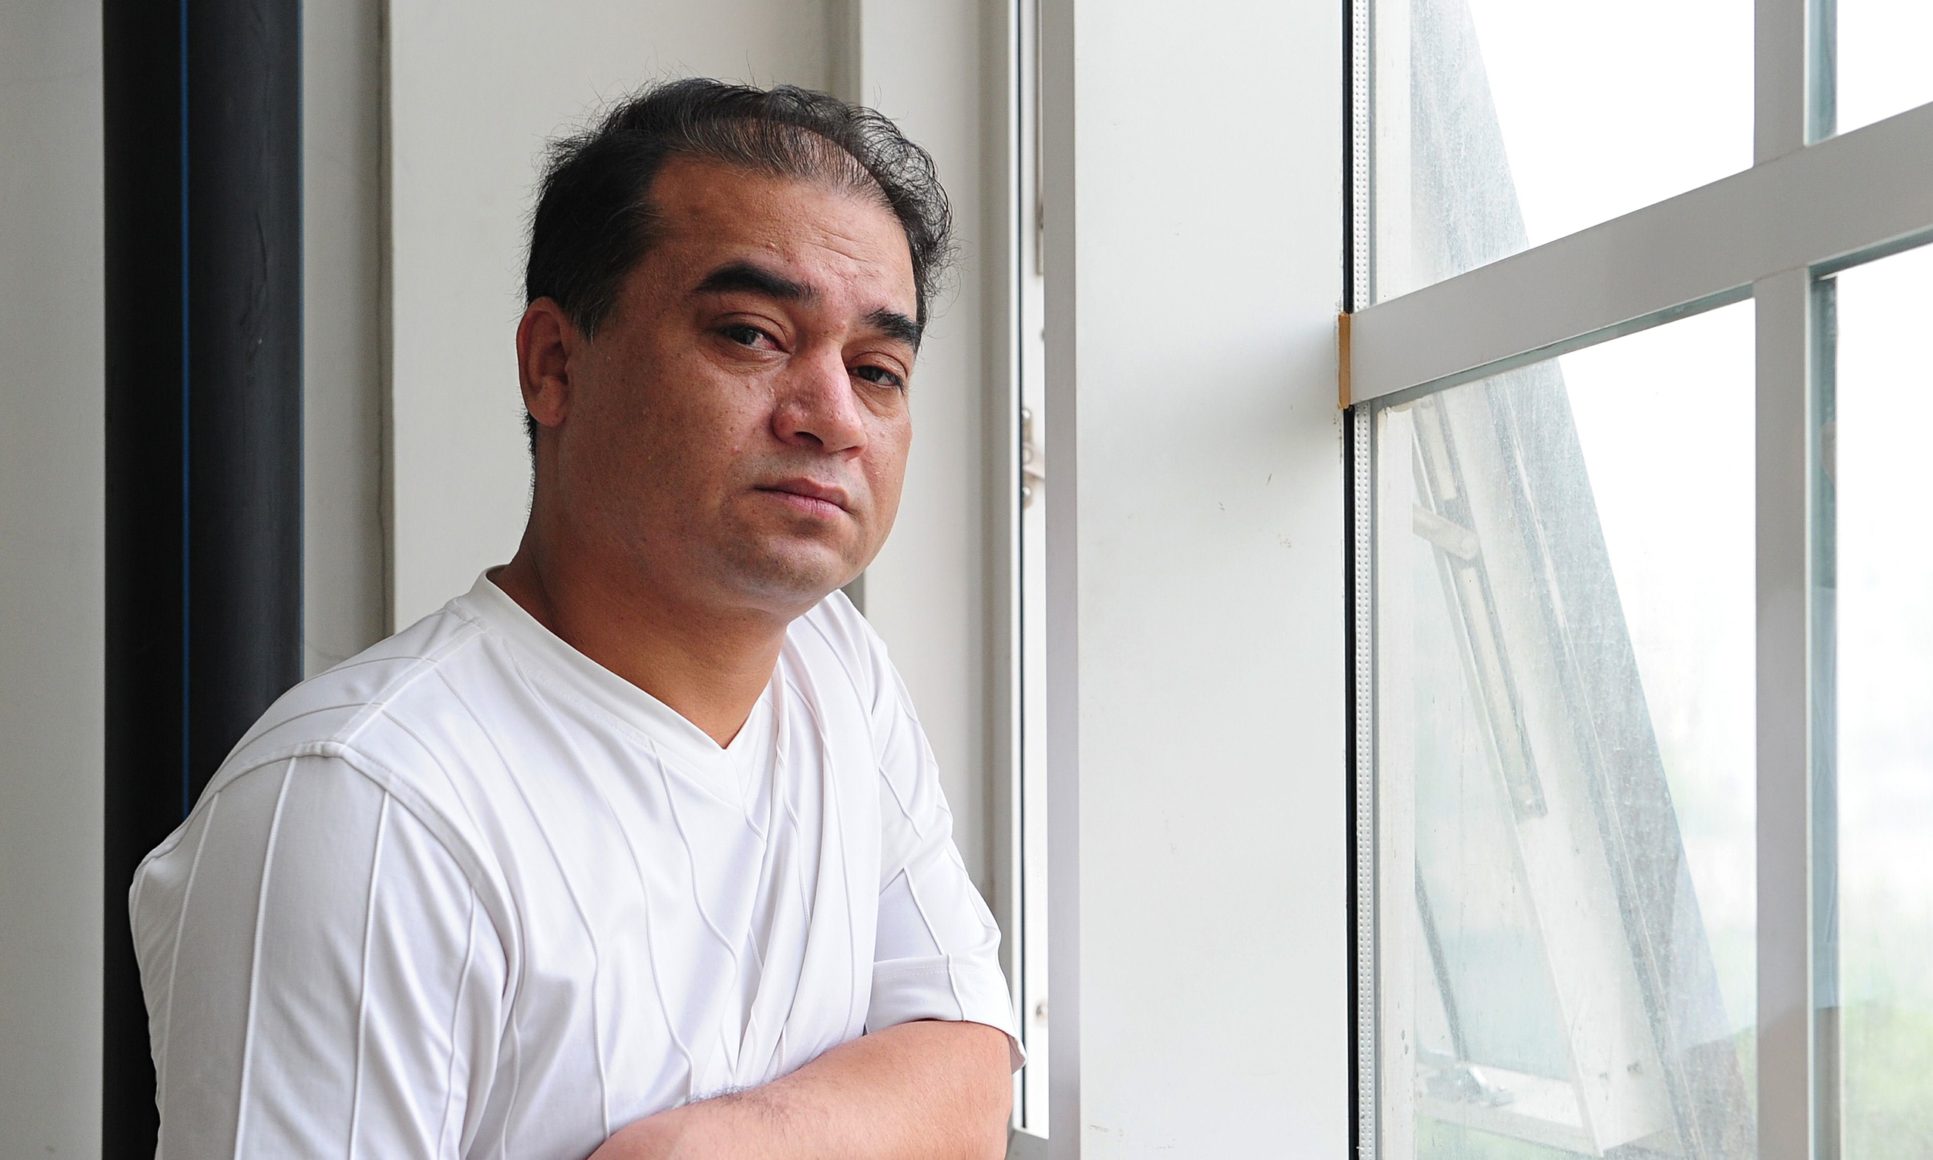 Ilham Tohti leans on a windowsill